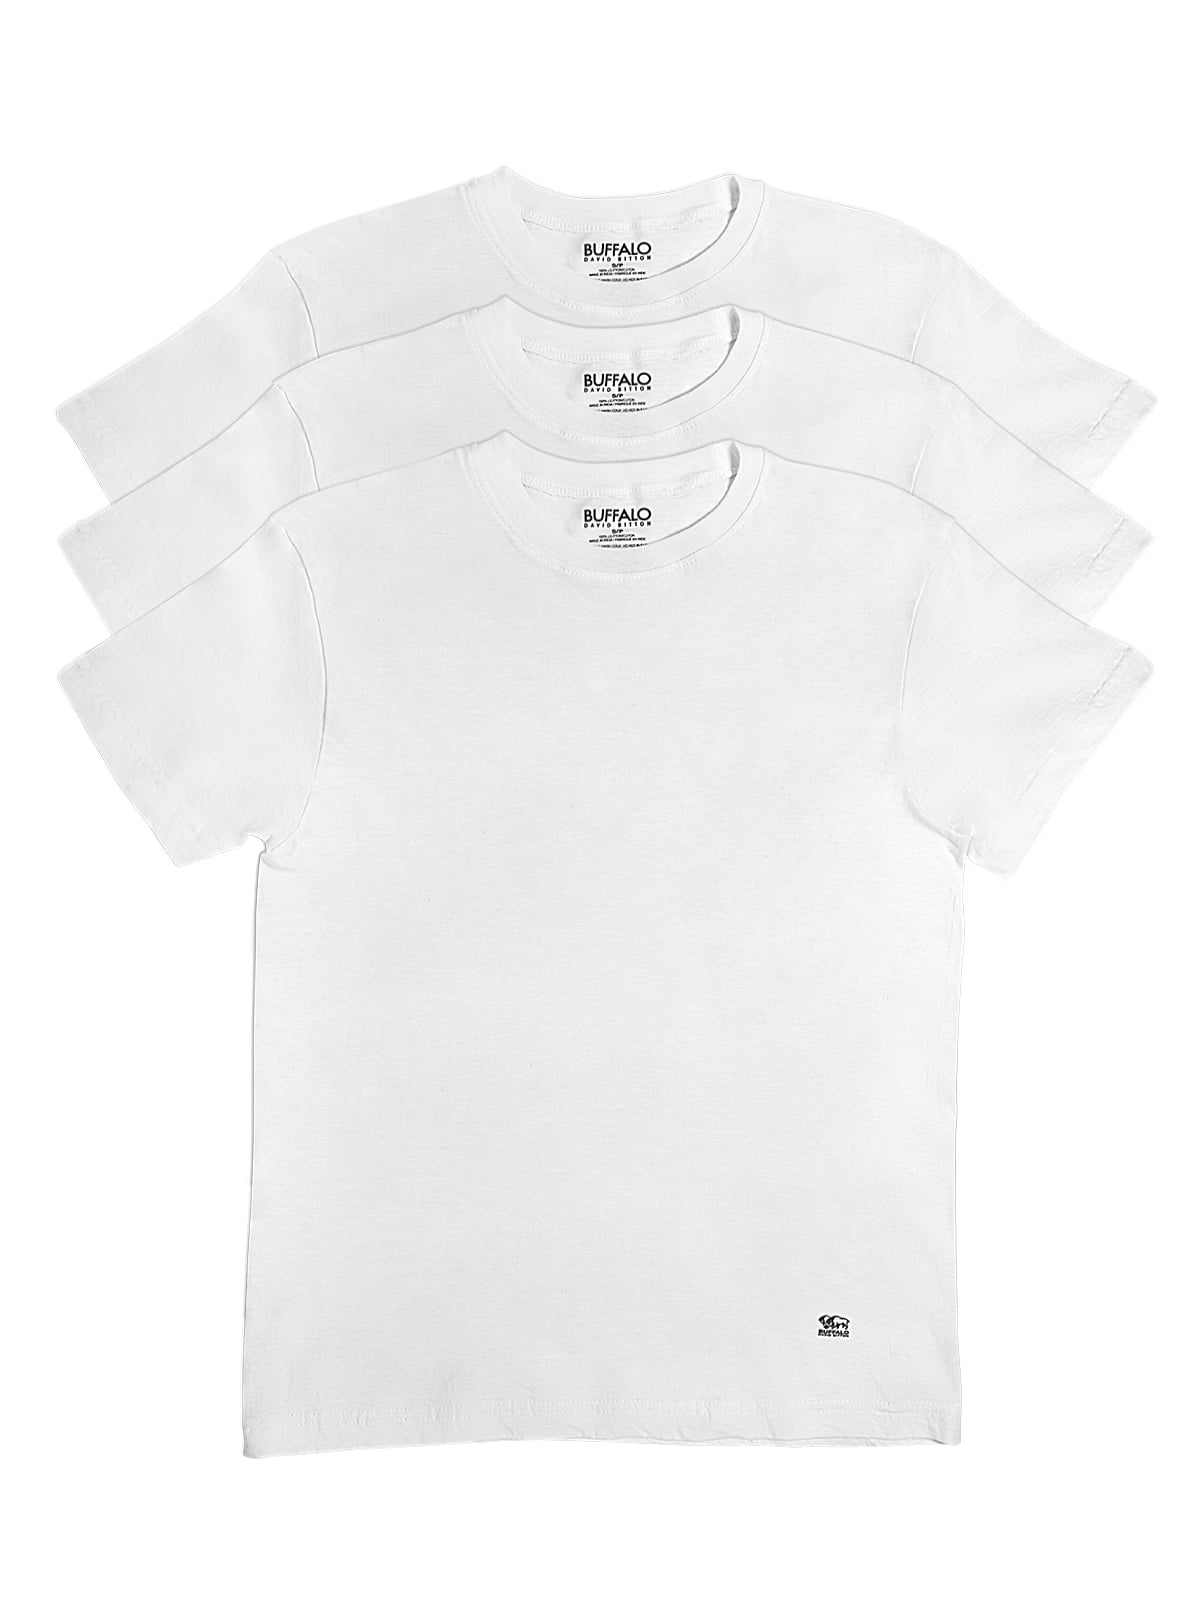 Men\'s Tagless Buffalo 100% T-Shirt Cotton White | David Neck Bitton Medium) (White, 3-Pack | Crew |